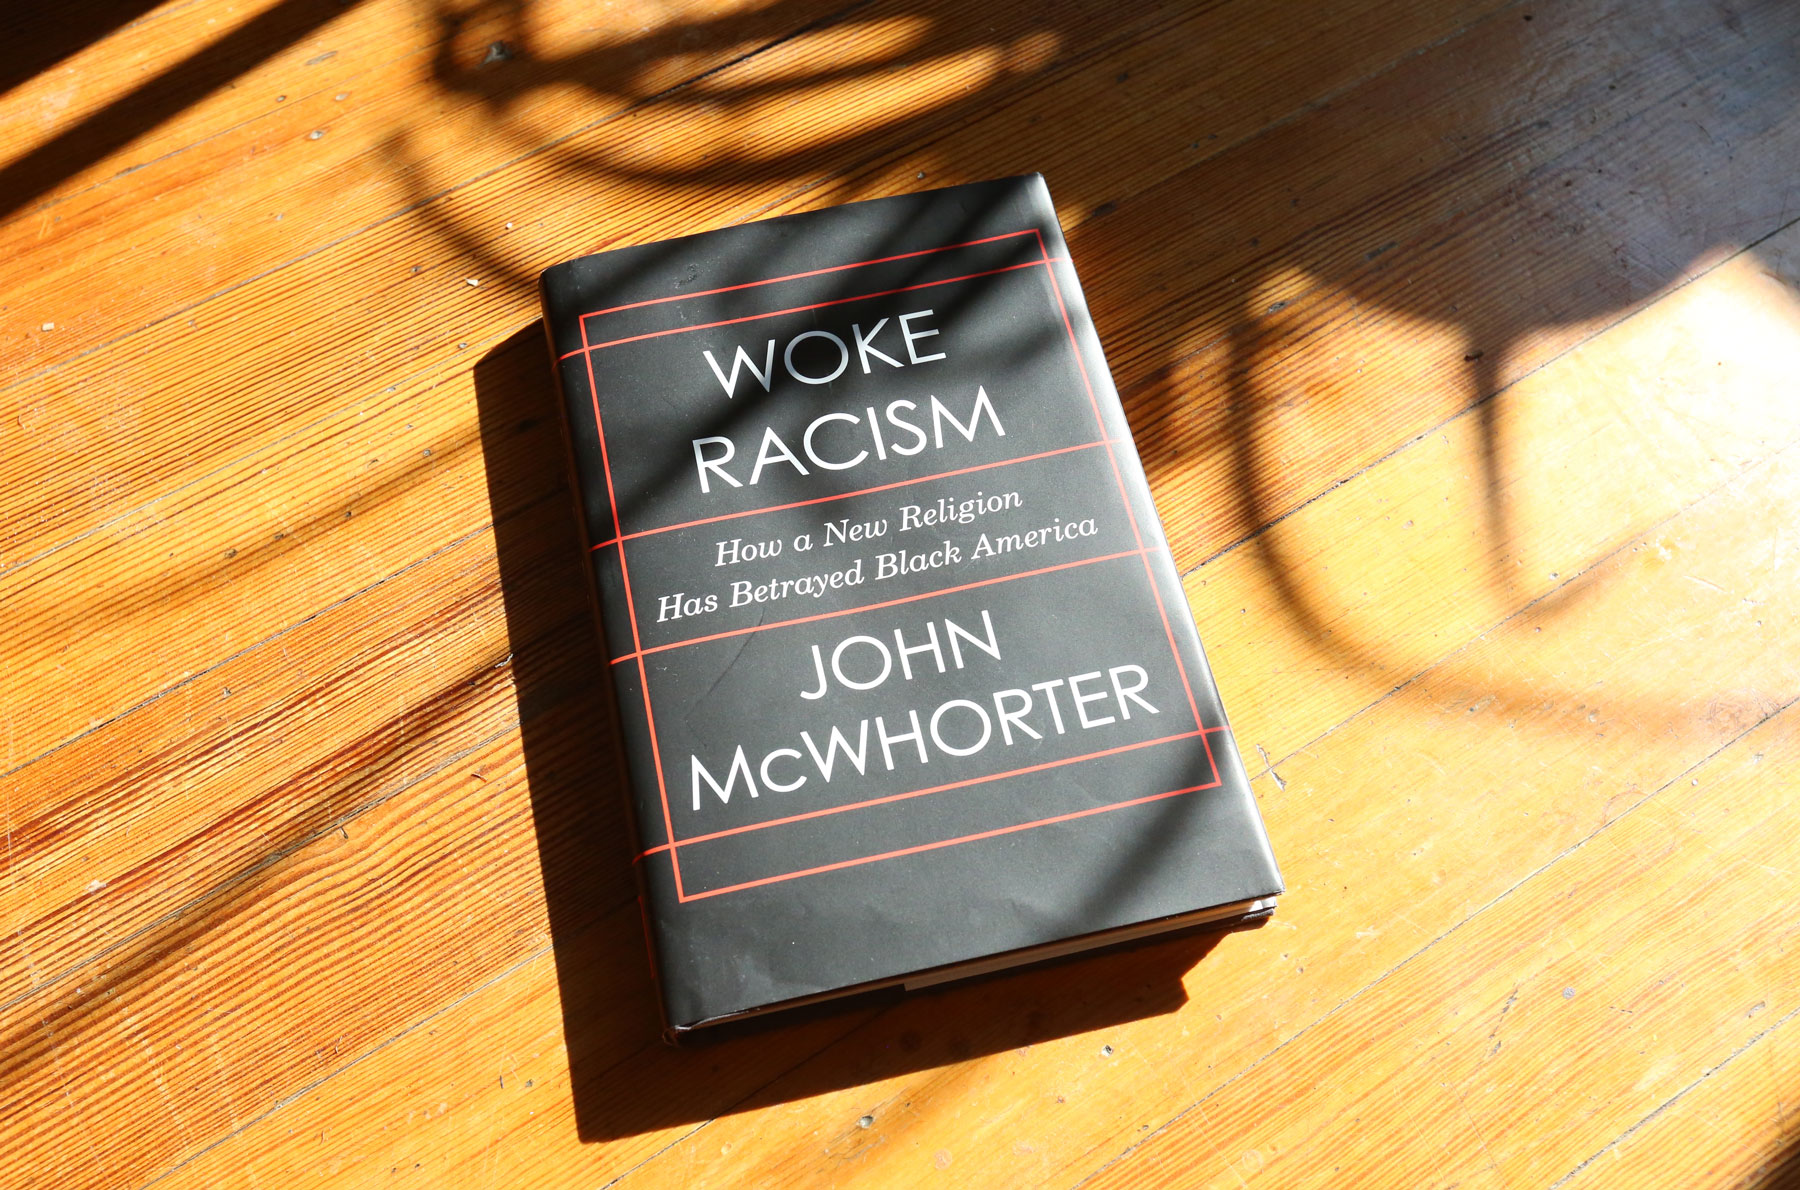 Woke Racism by John McWhorter.